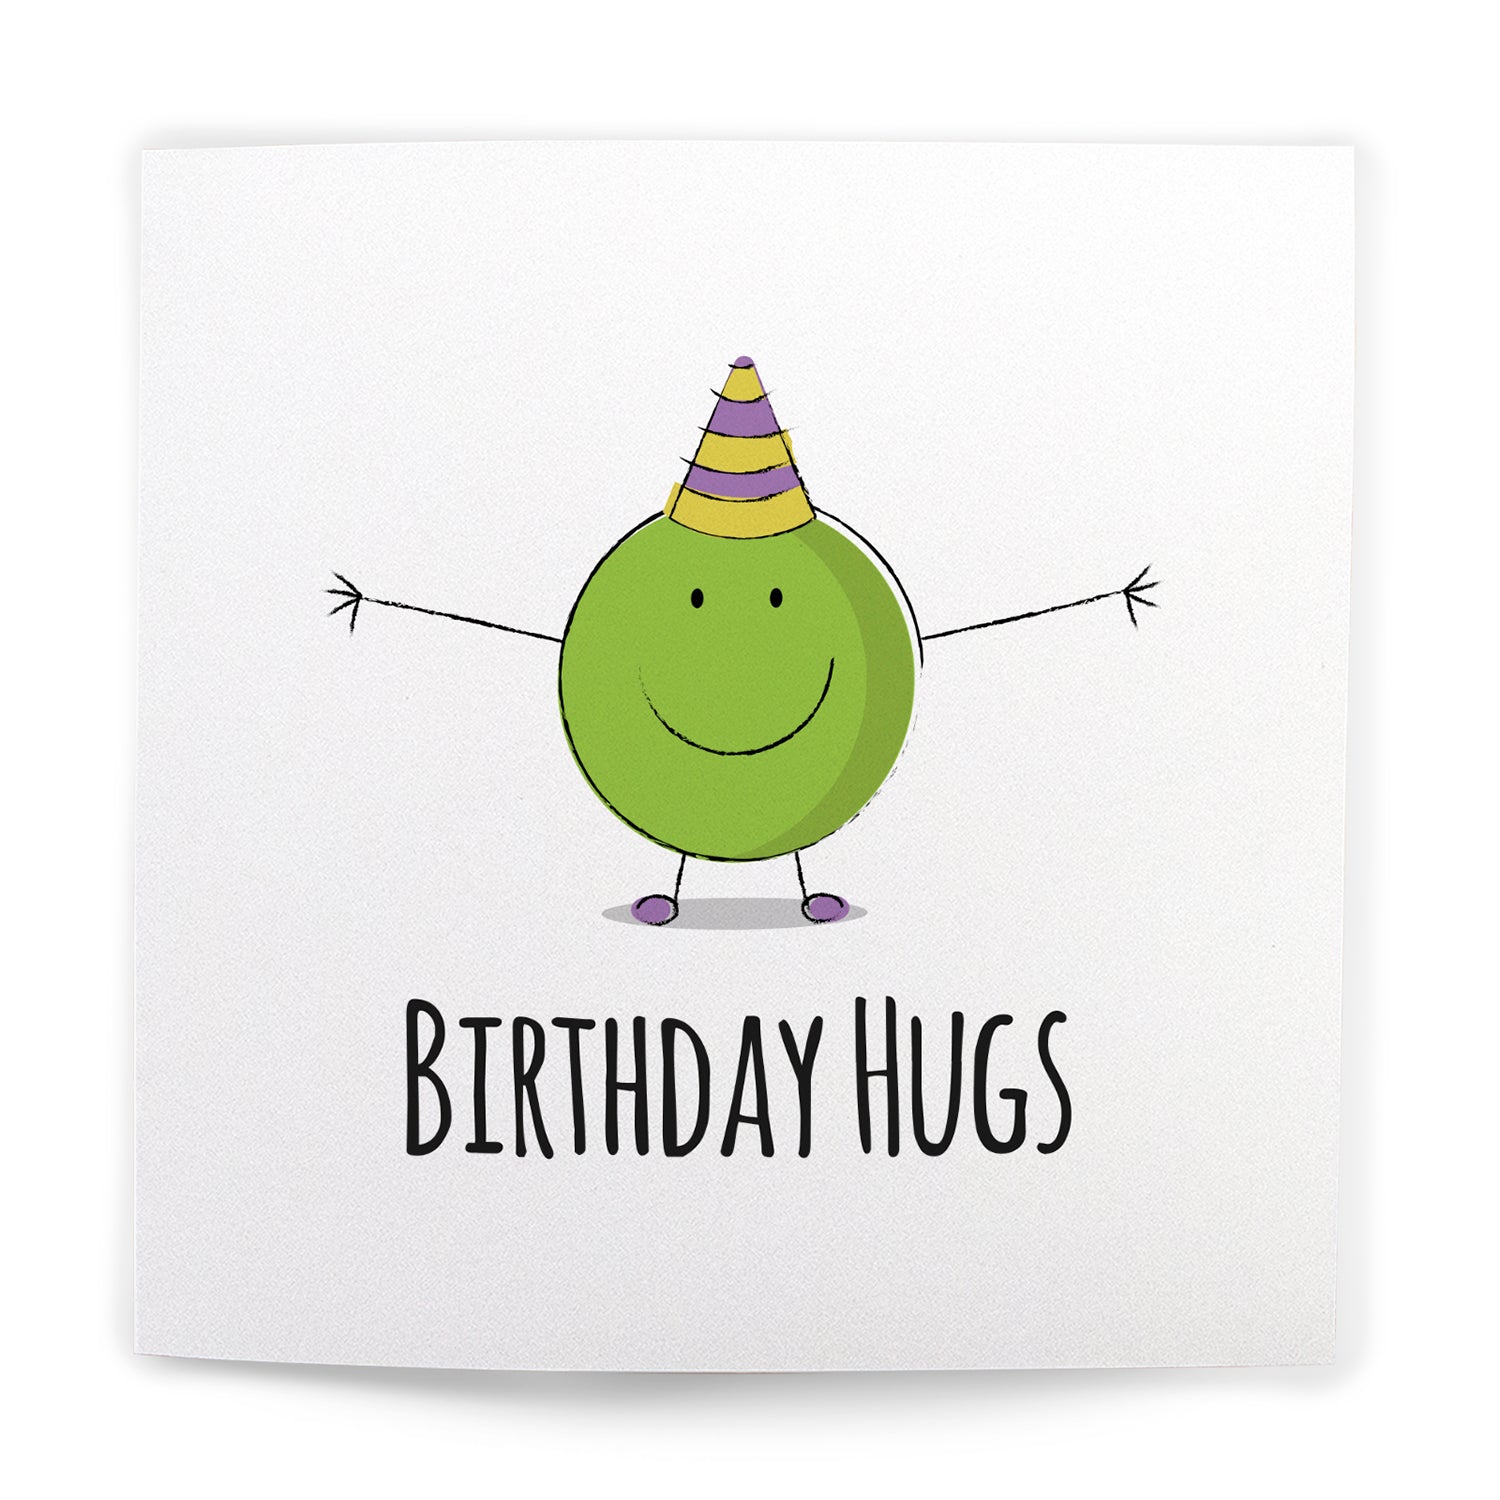 Birthday-hugs-birthday-card-cute-funny-Michton-UK